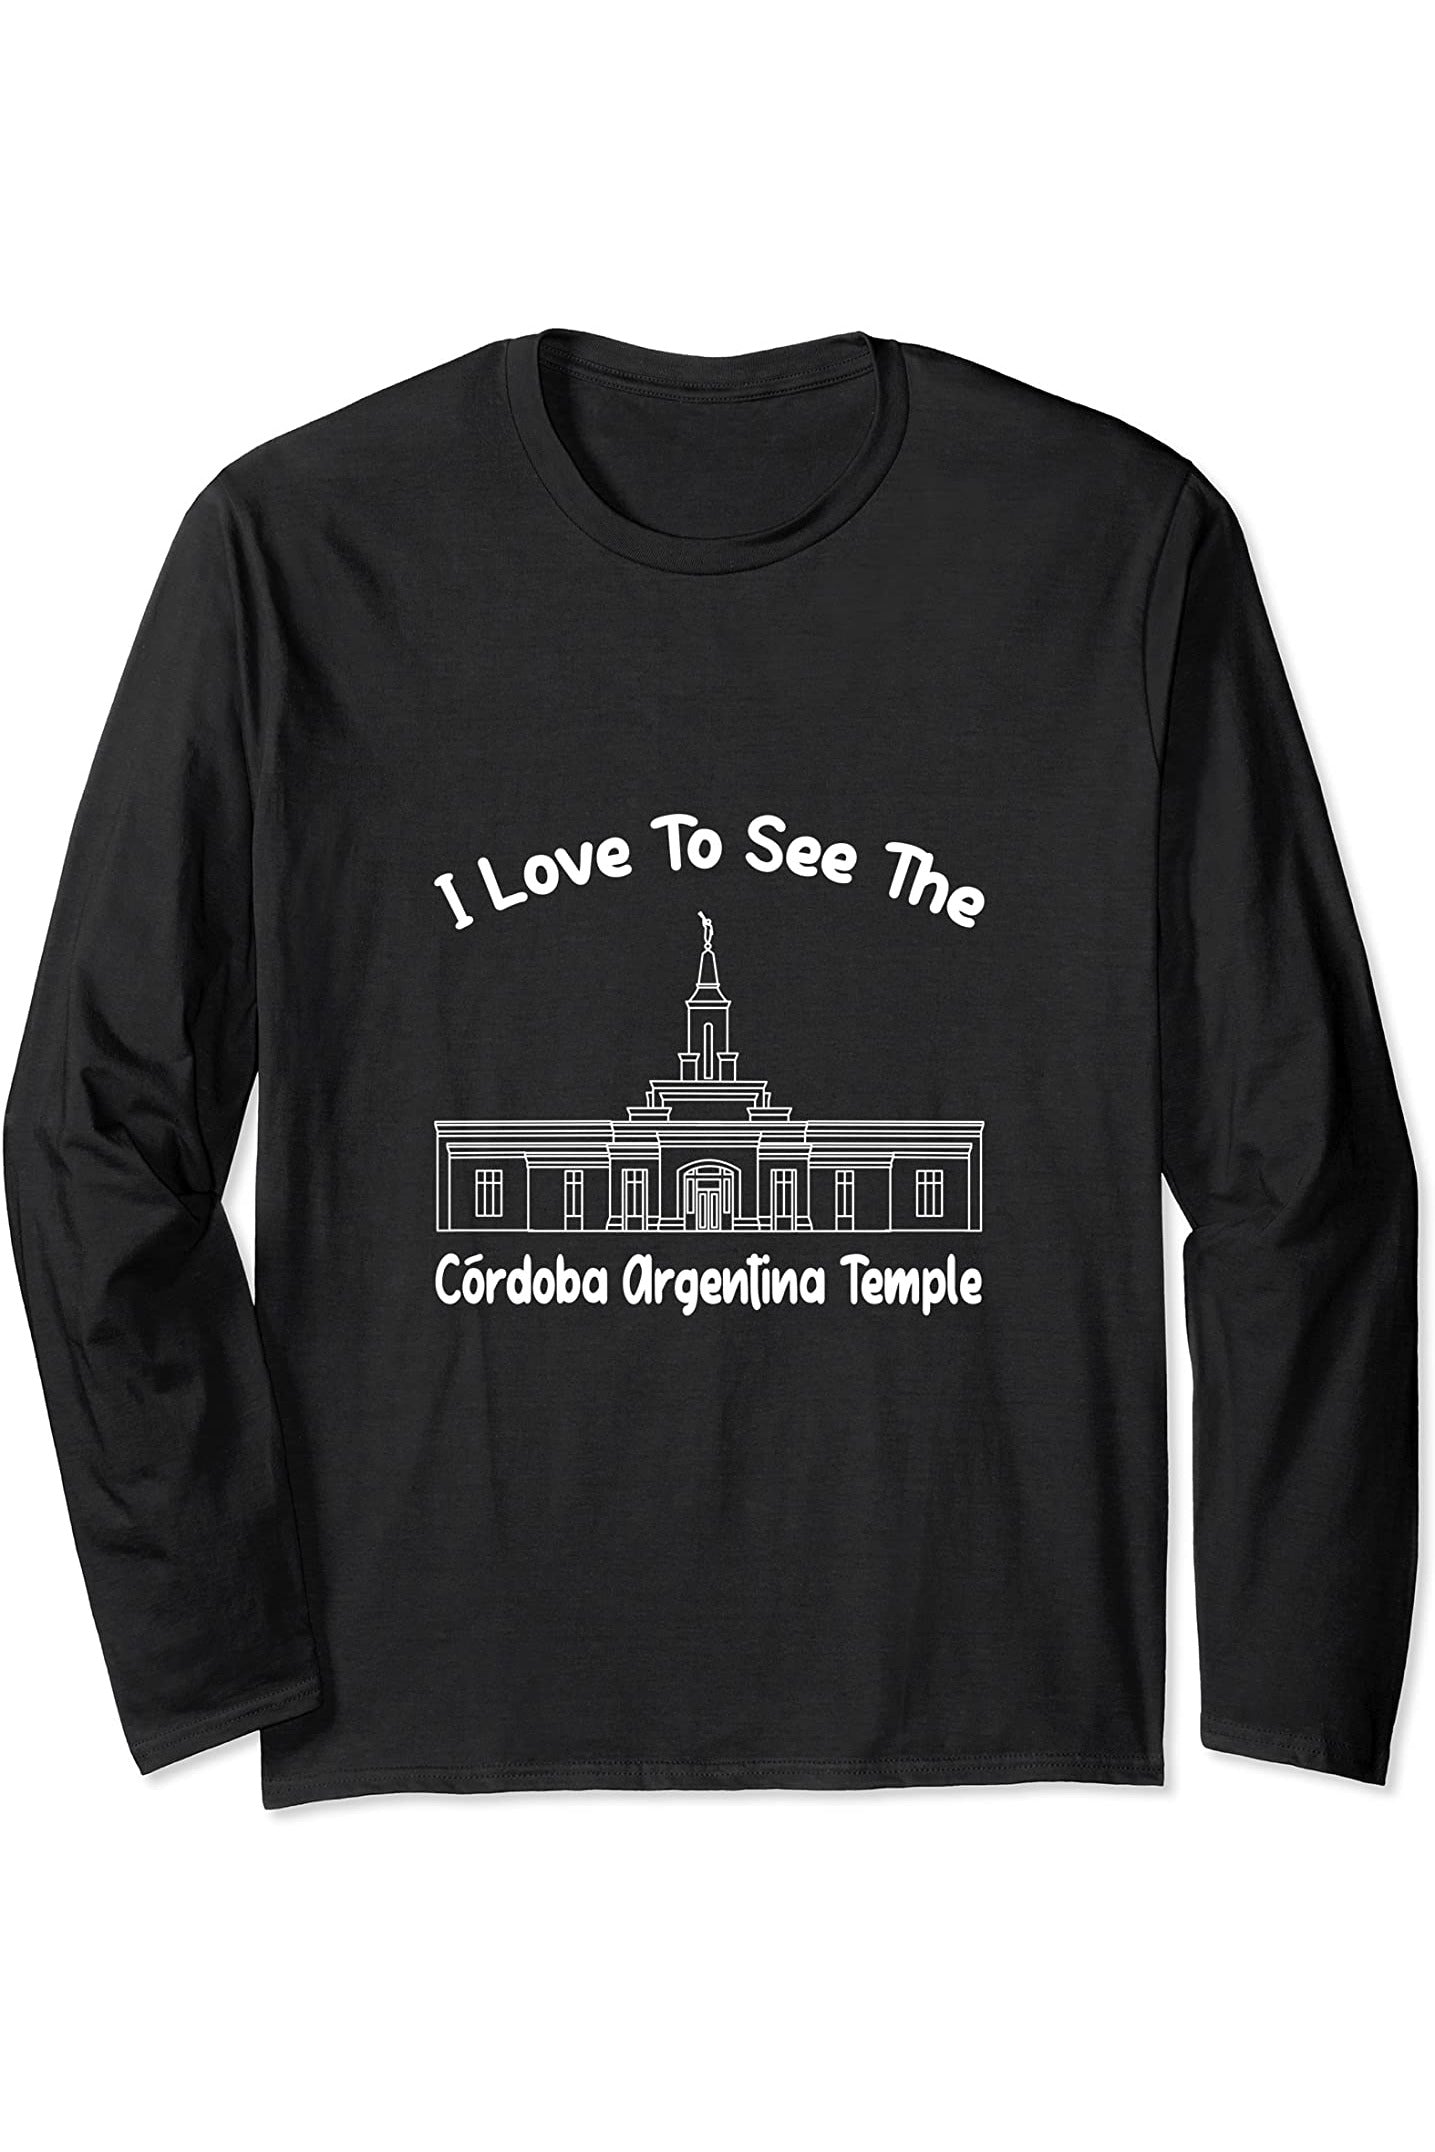 Cordoba Argentina Temple Long Sleeve T-Shirt - Primary Style (English) US